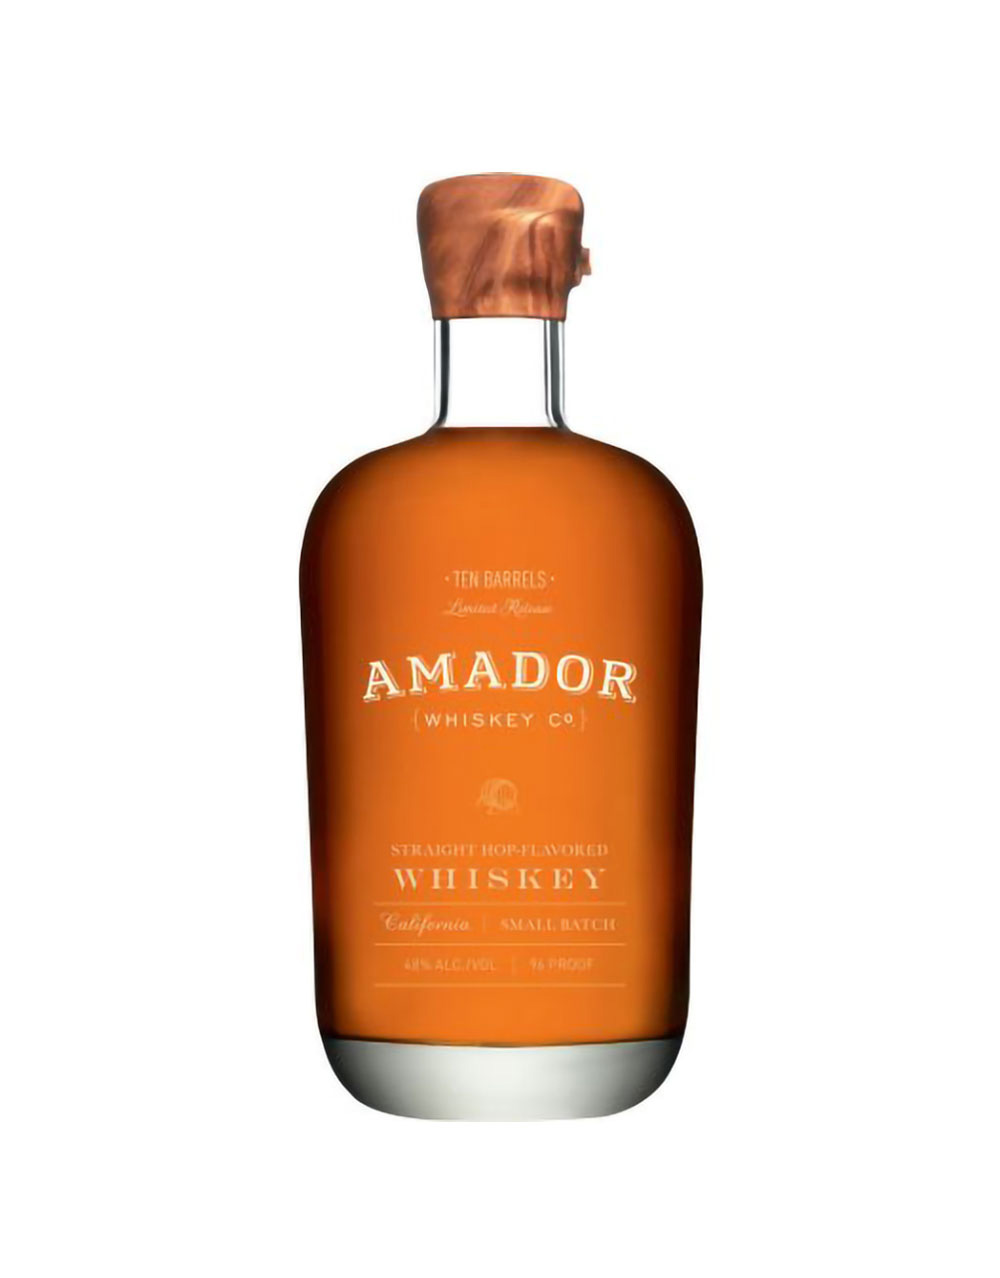 Amador Ten Barrels Straight Hop Flavored Whiskey